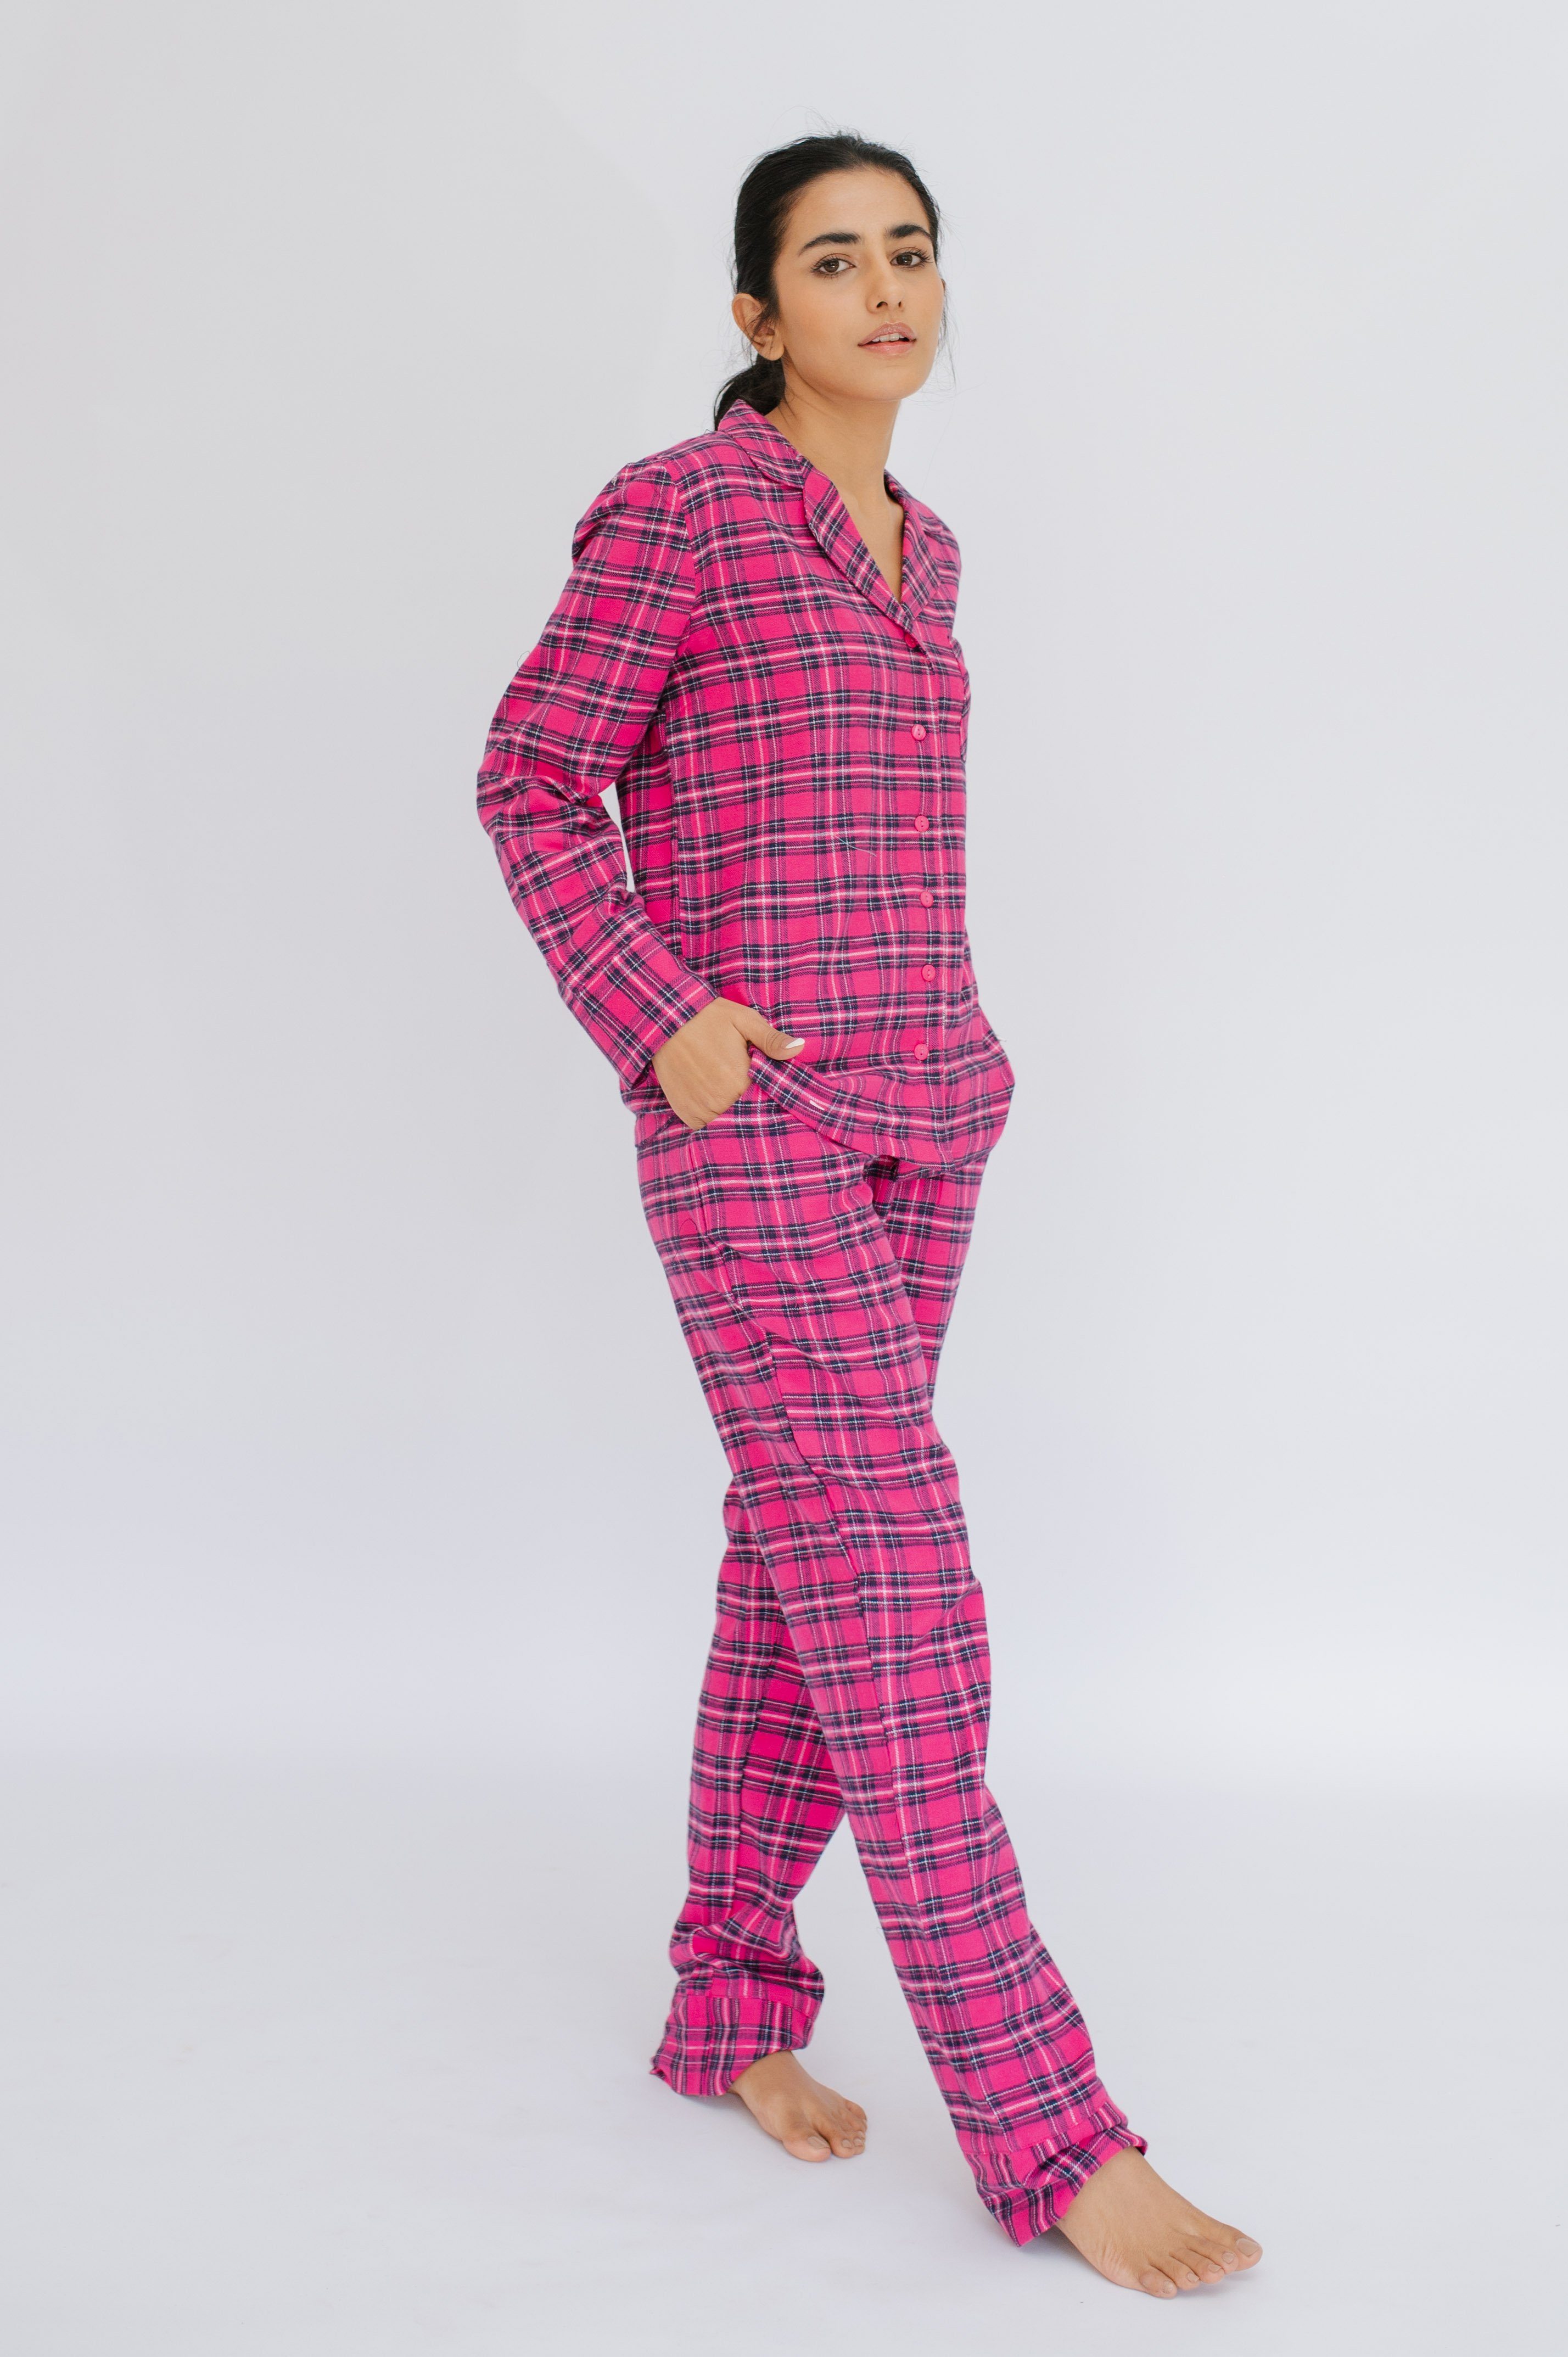 SNOOZE OFF Pyjama Schlafanzug 1 (2 Karomuster in fuchsia-blauem mit Stück) tlg., Kontrastpaspel-Details